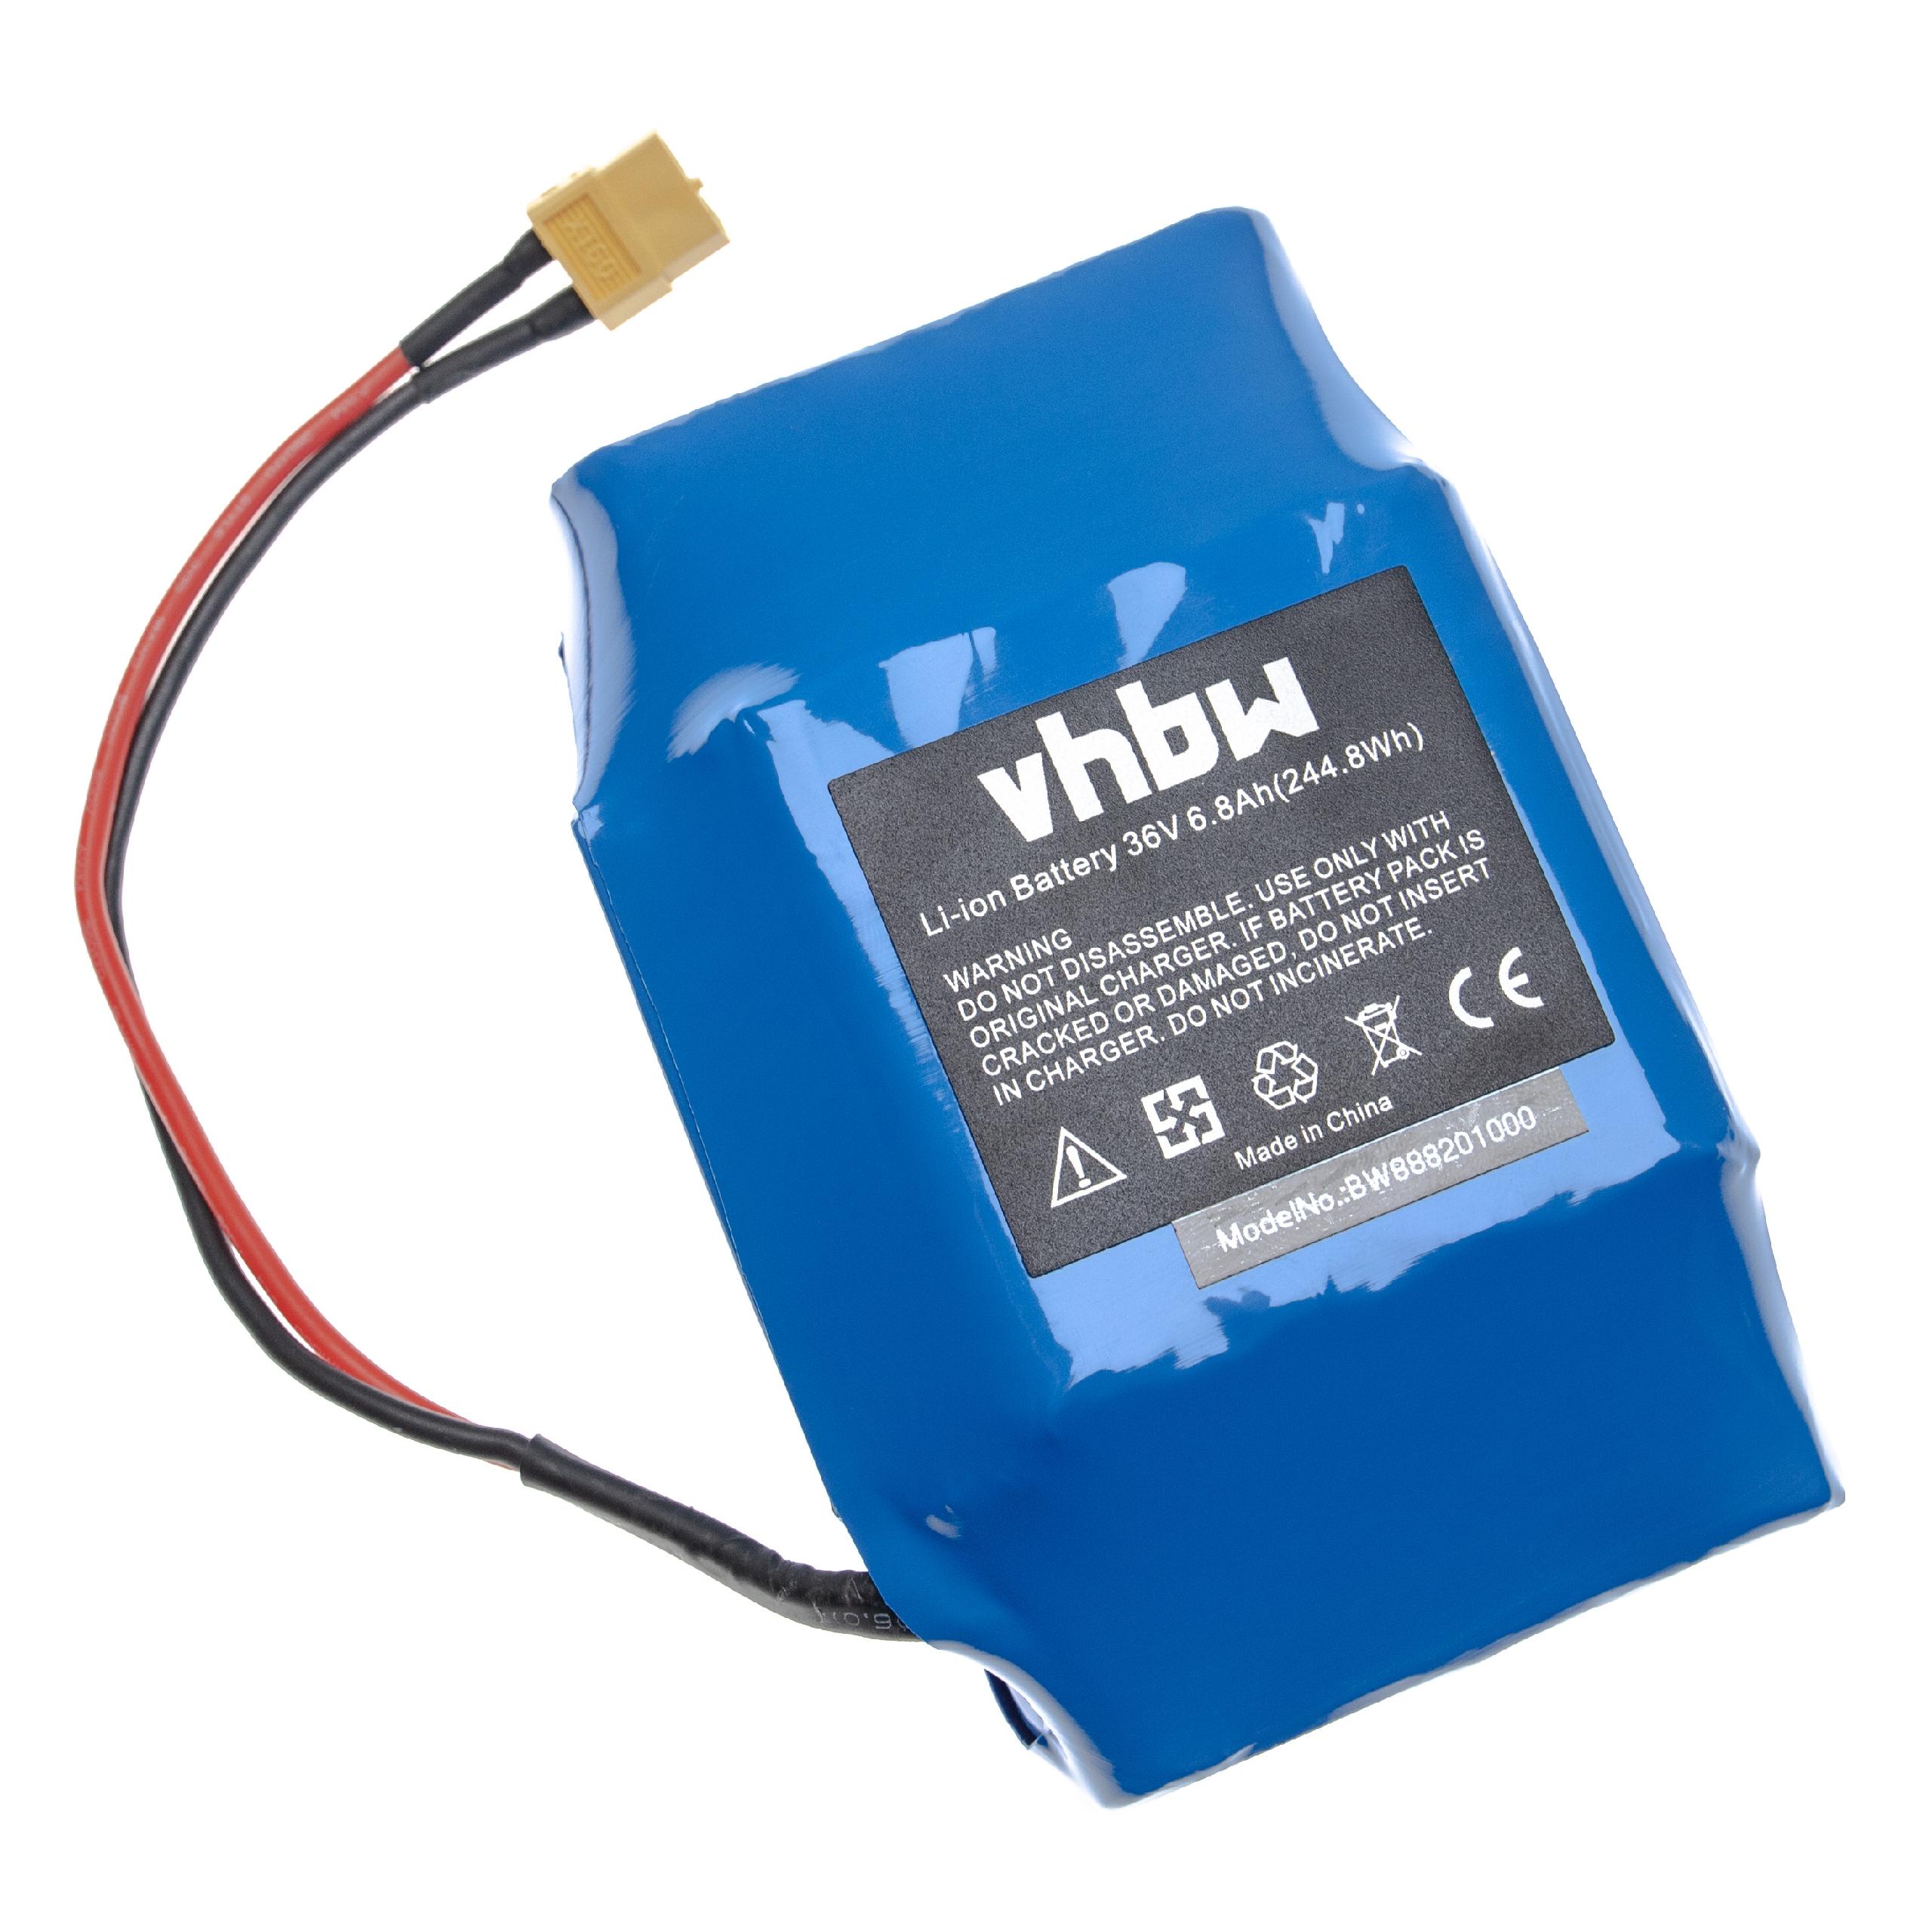 Batterie remplace Bluewheel 10IXR19/65-2, HPK-11 pour gyropode - 6800mAh 36V Li-ion